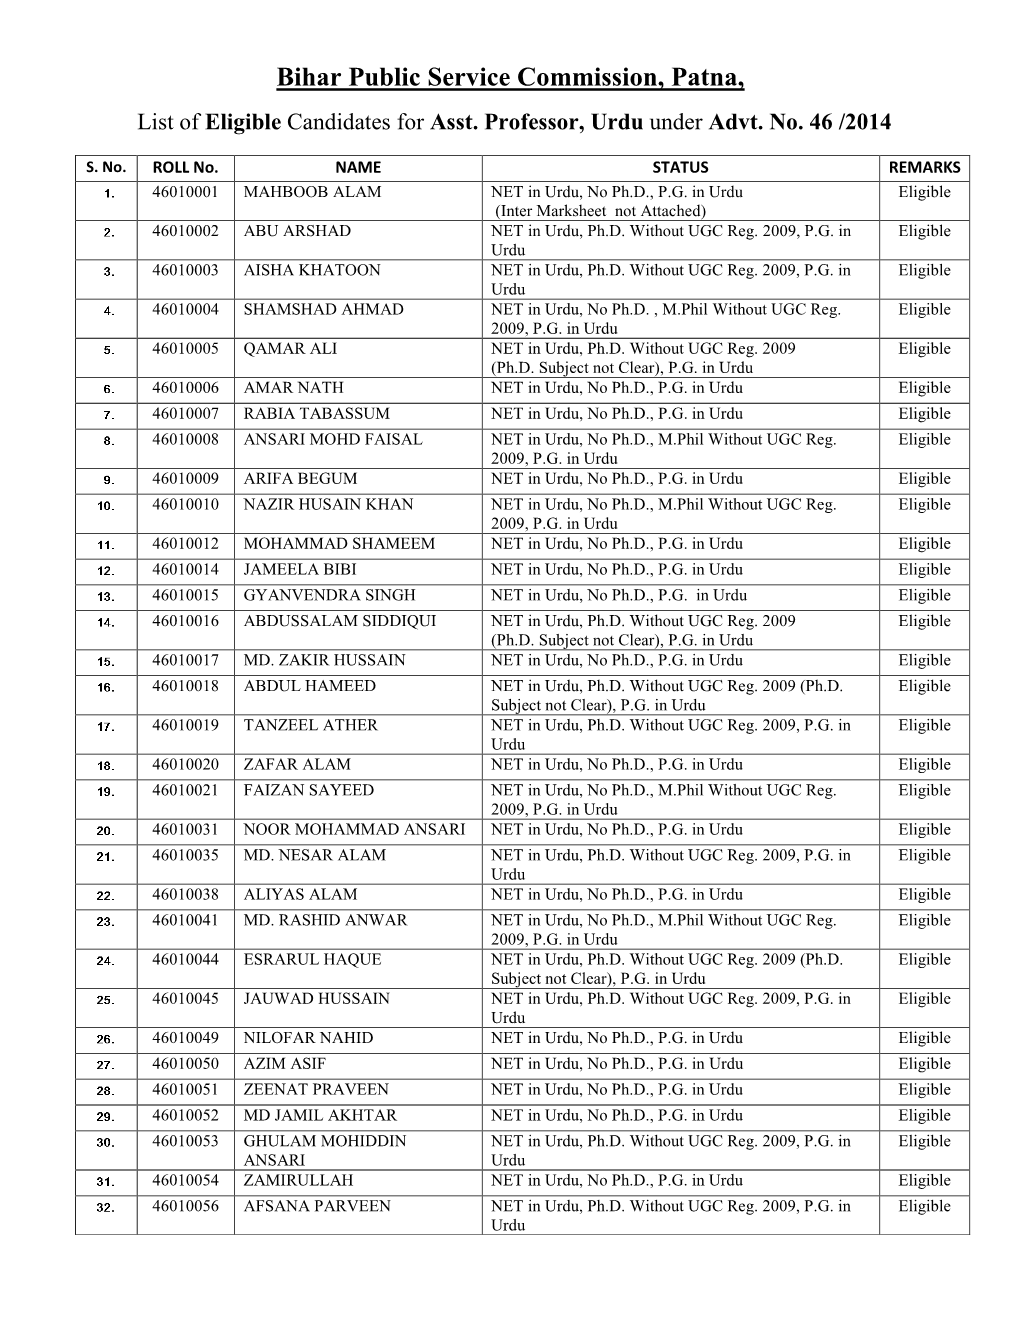 Bihar Public Service Commission, Patna, List of Eligible Candidates for Asst